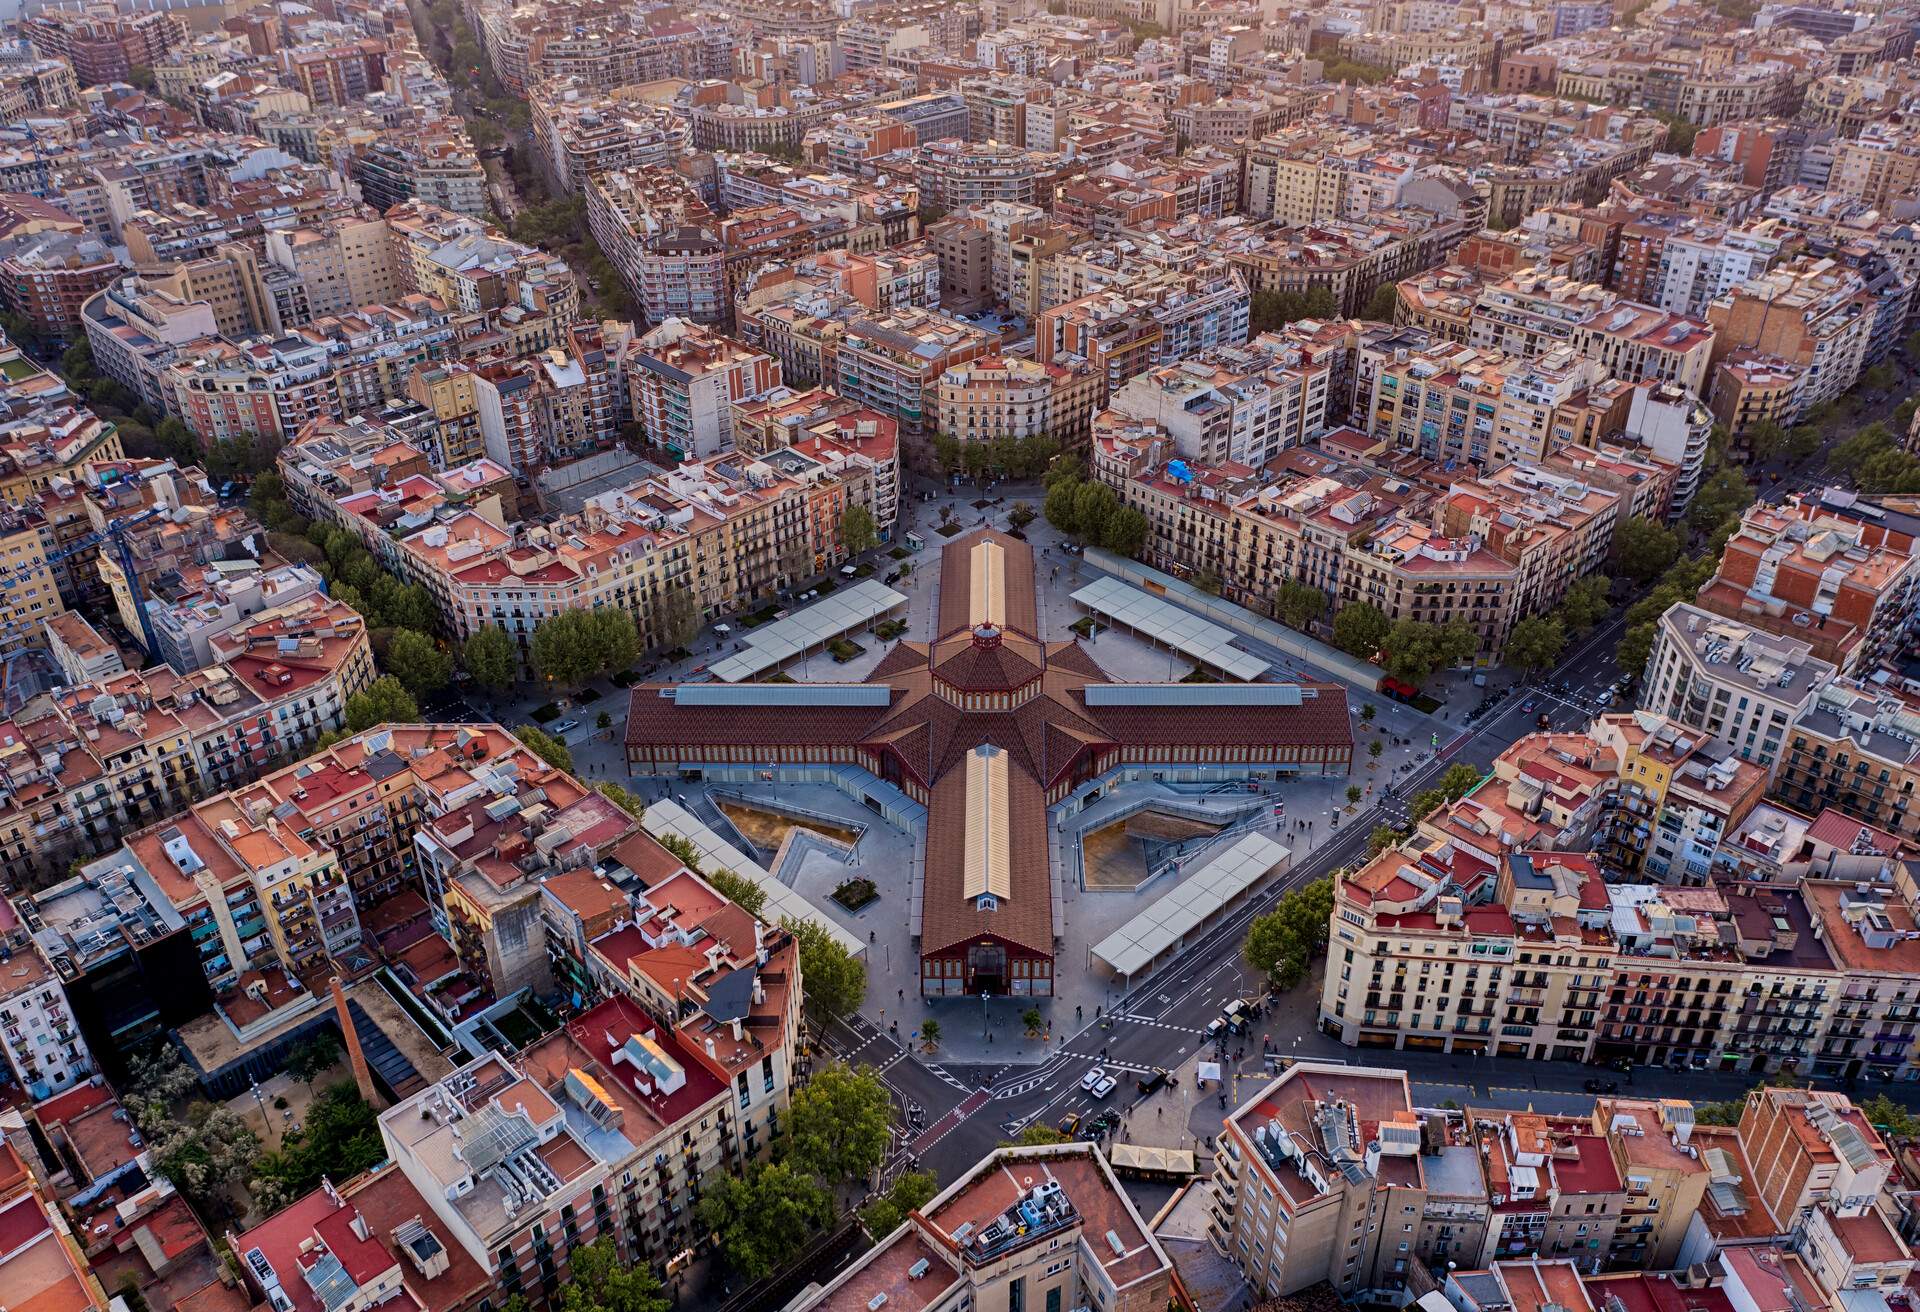 Cityscape of Barcelona with Mercat Sant Antoni